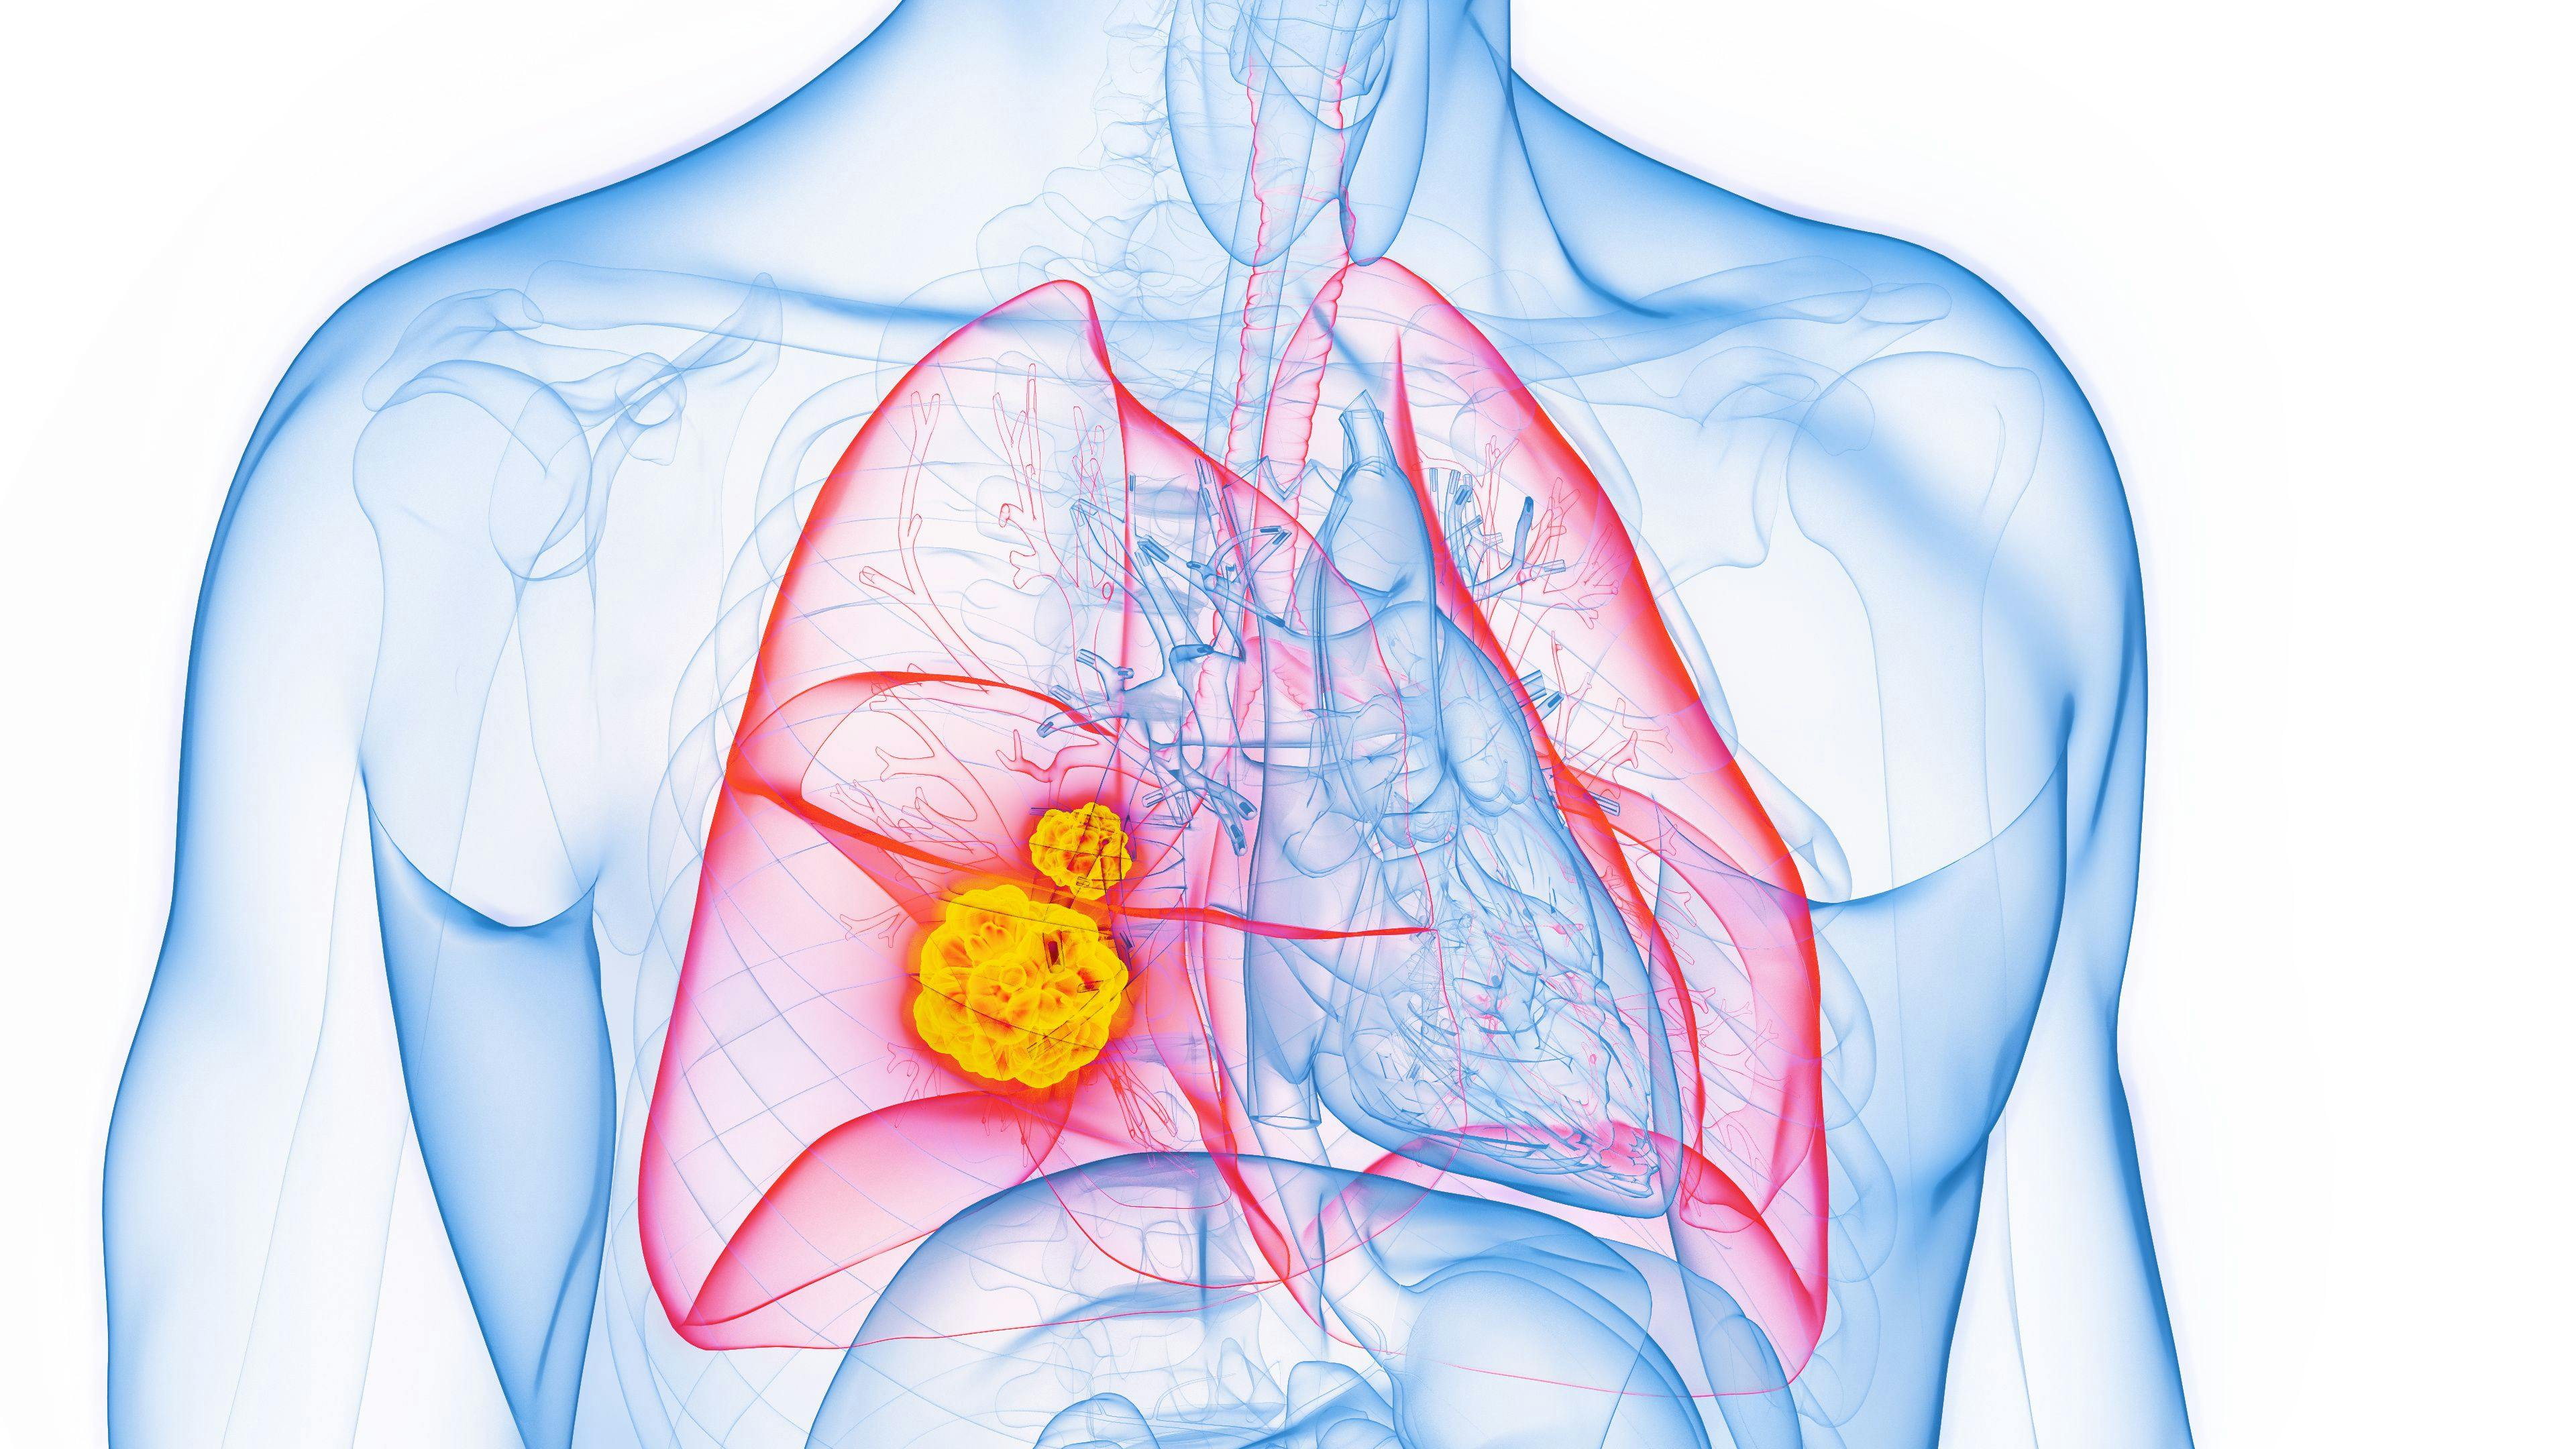 3D rendered medical illustration of male anatomy with lung cancer: © Sebastian Kaulitzki- stock.adobe.com